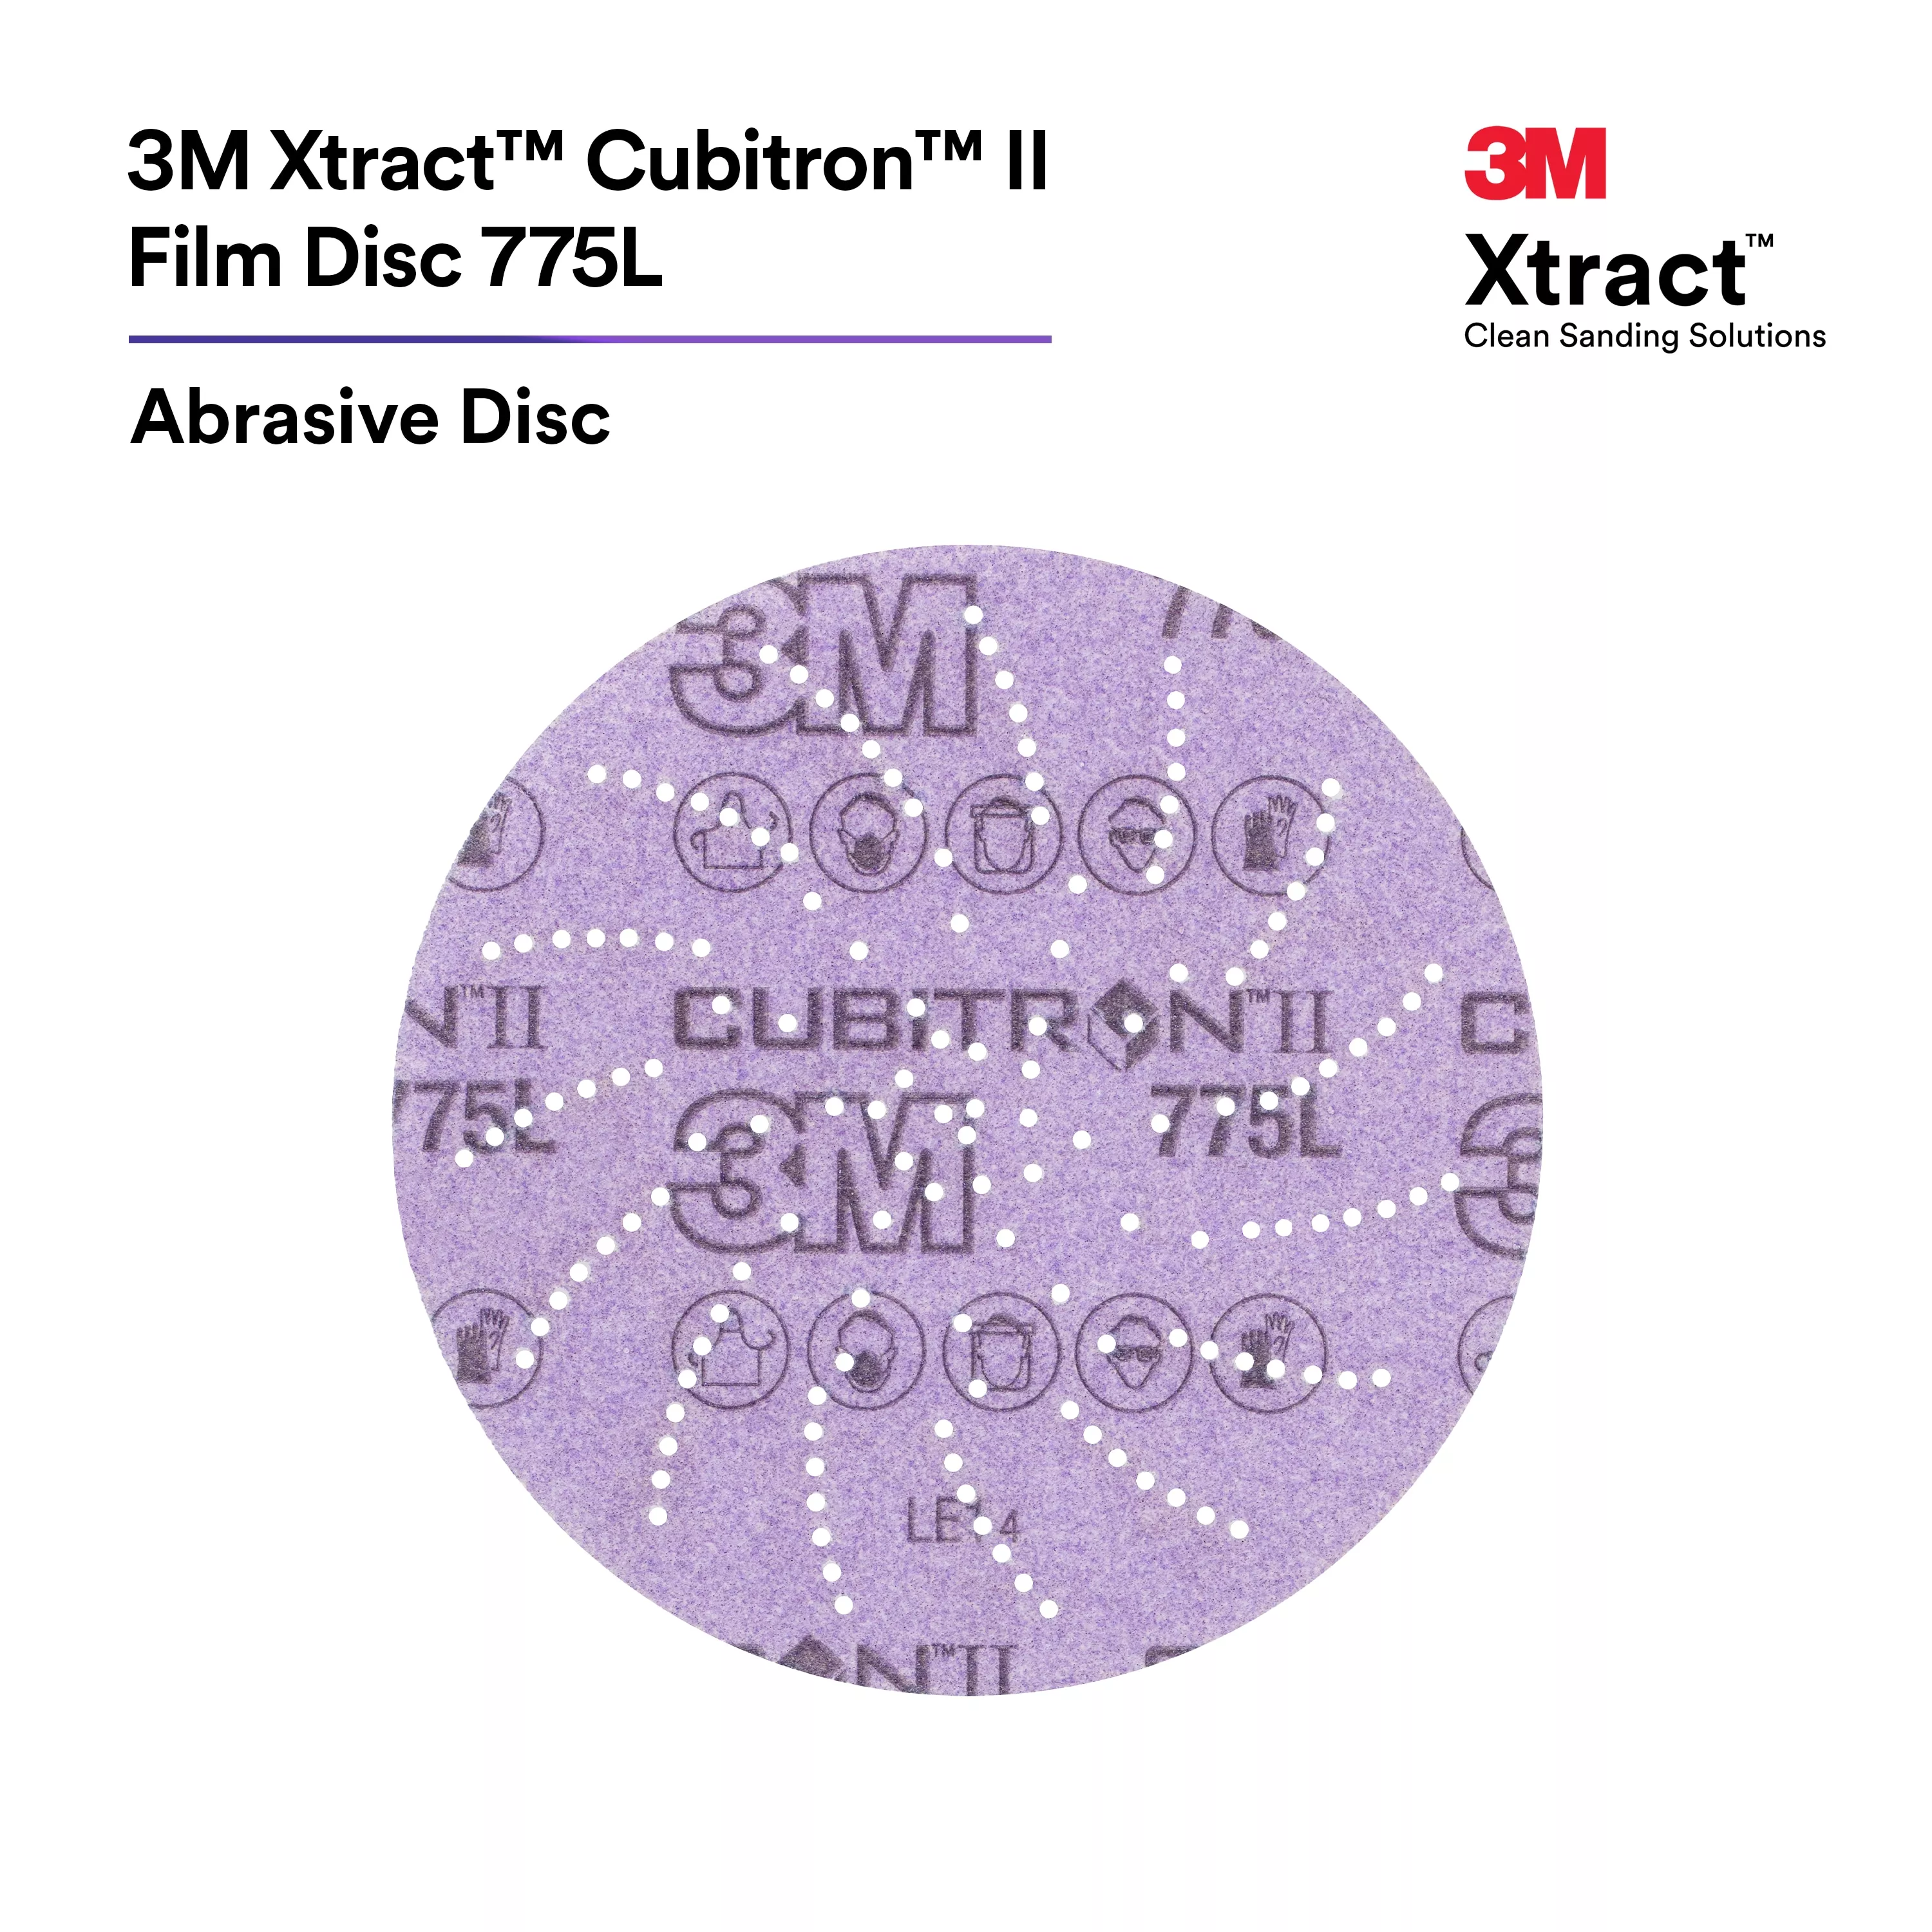 SKU 7100145433 | 3M Xtract™ Cubitron™ II Film Disc 775L